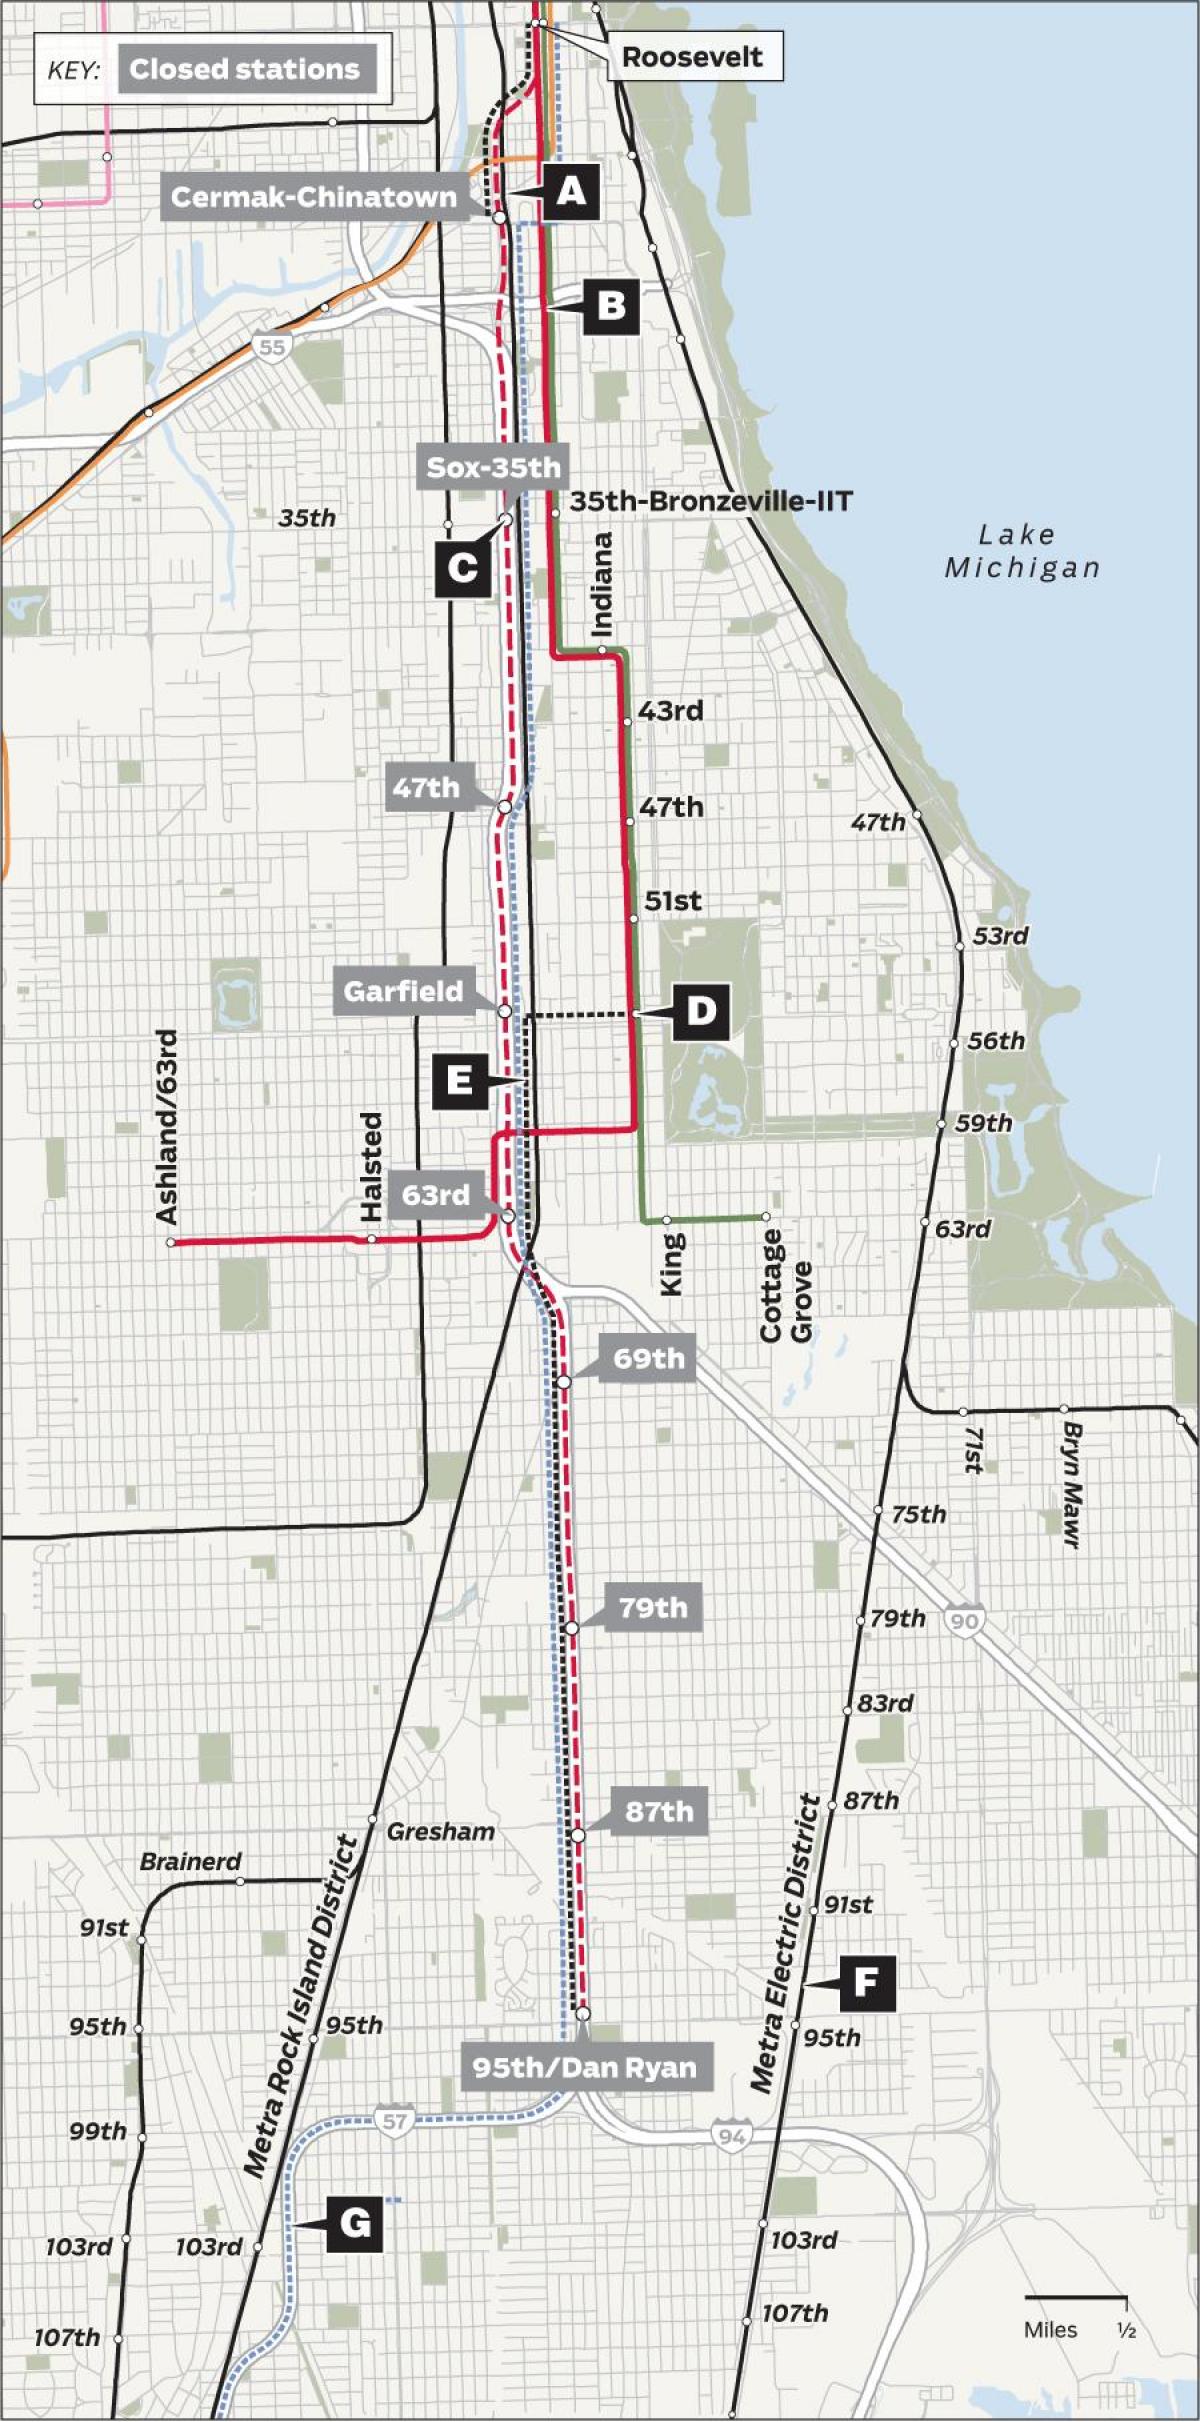 redline Chicago zemljevid